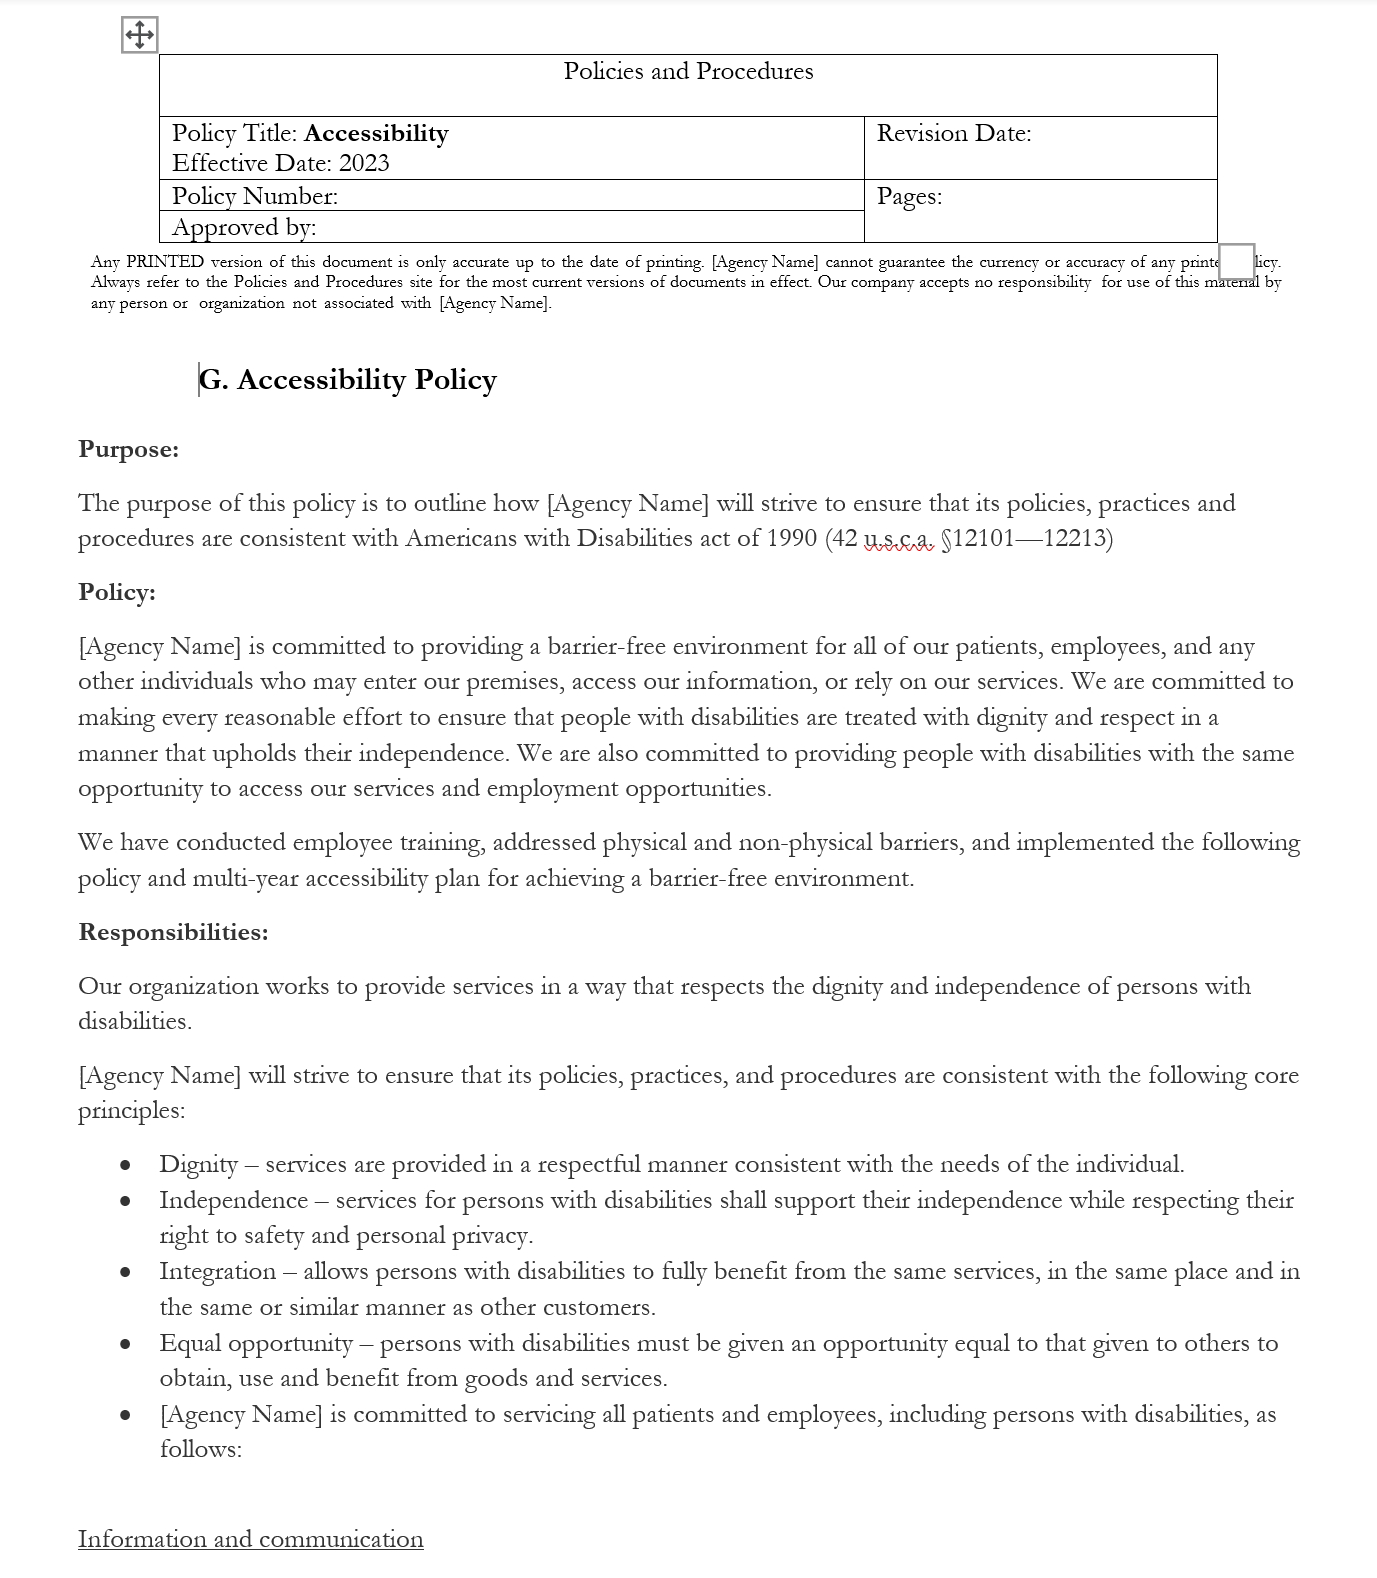 U.S Home Care Policy & Procedures (American Version)